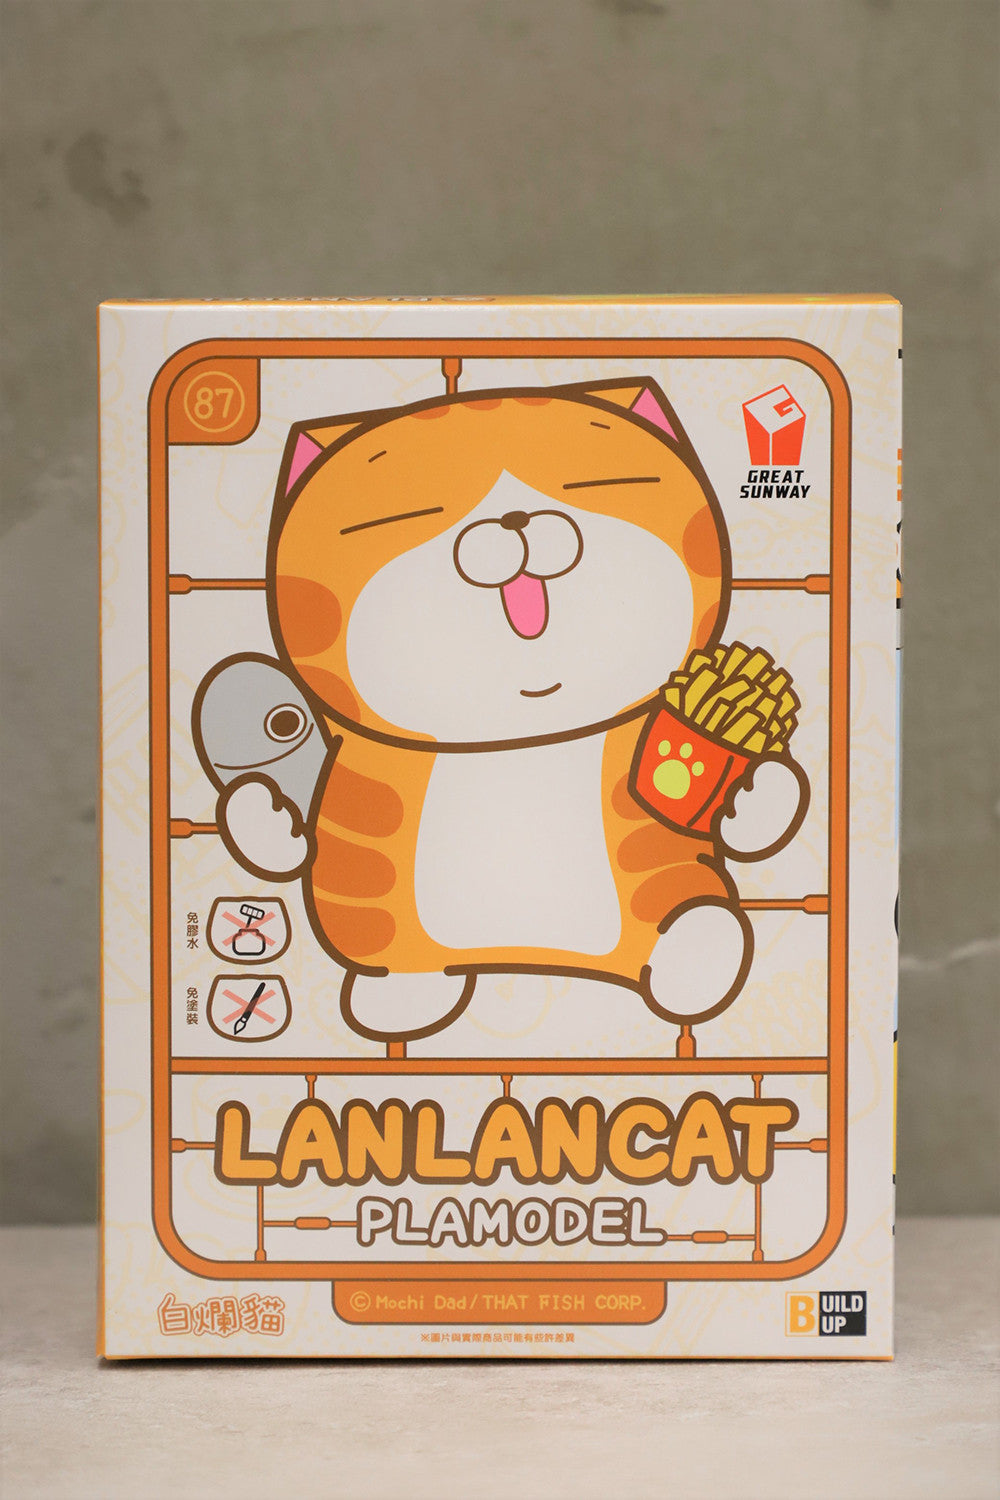 LanLan Cat Plamodel licensed product by Great Sunway